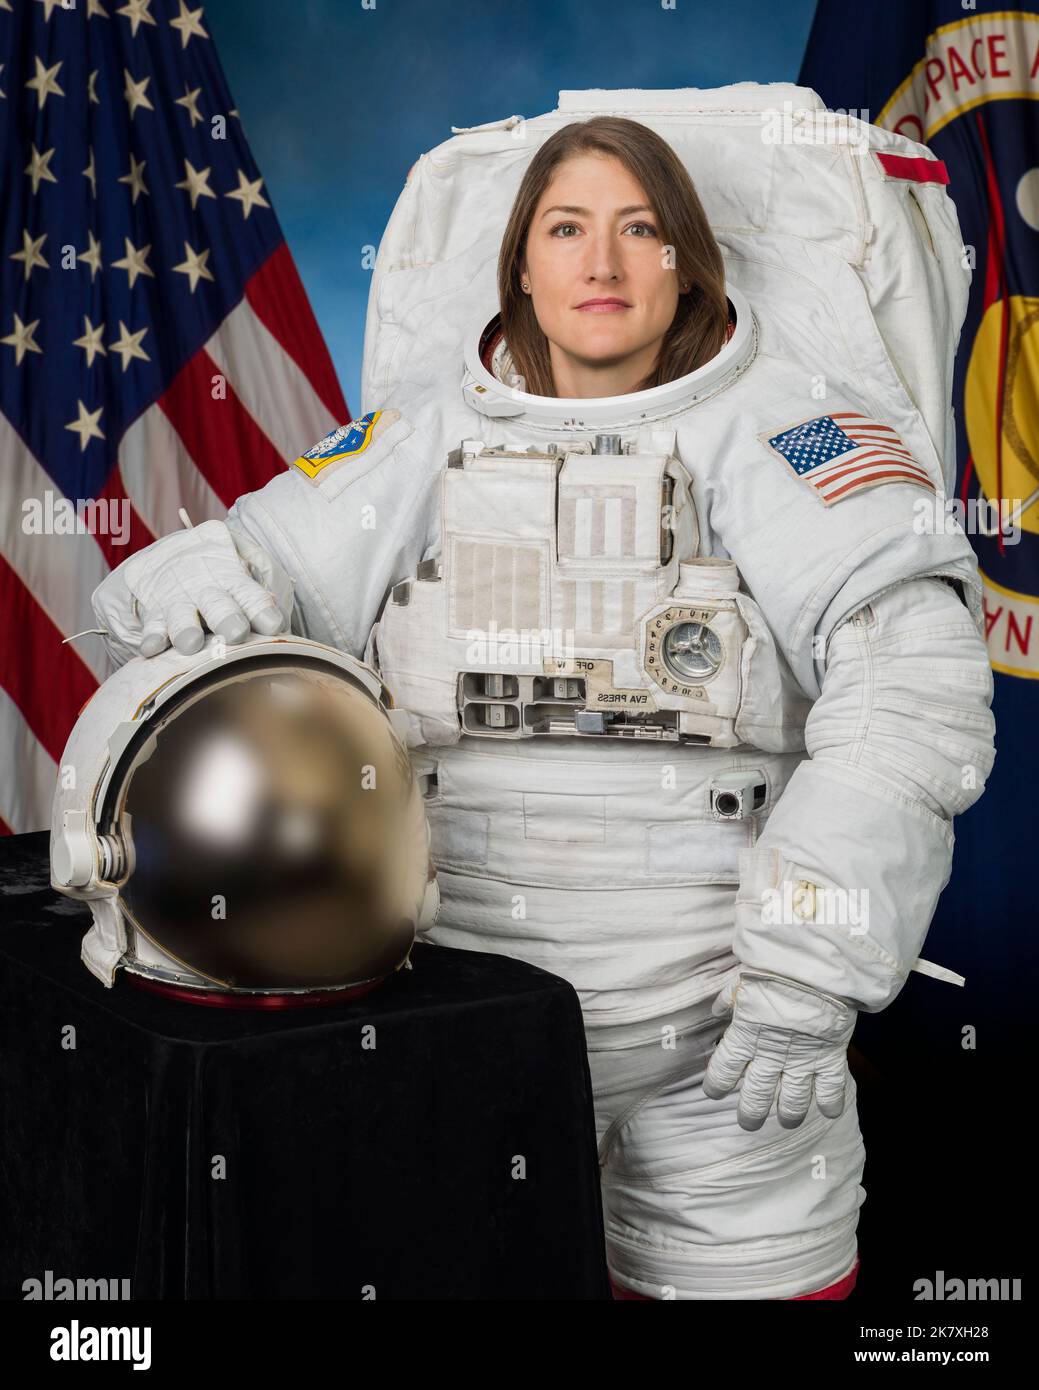 Astronautin Christina Koch Offizielles EMU-Porträt. Offizielles Porträt der NASA-Astronautin Christina Koch. Stockfoto